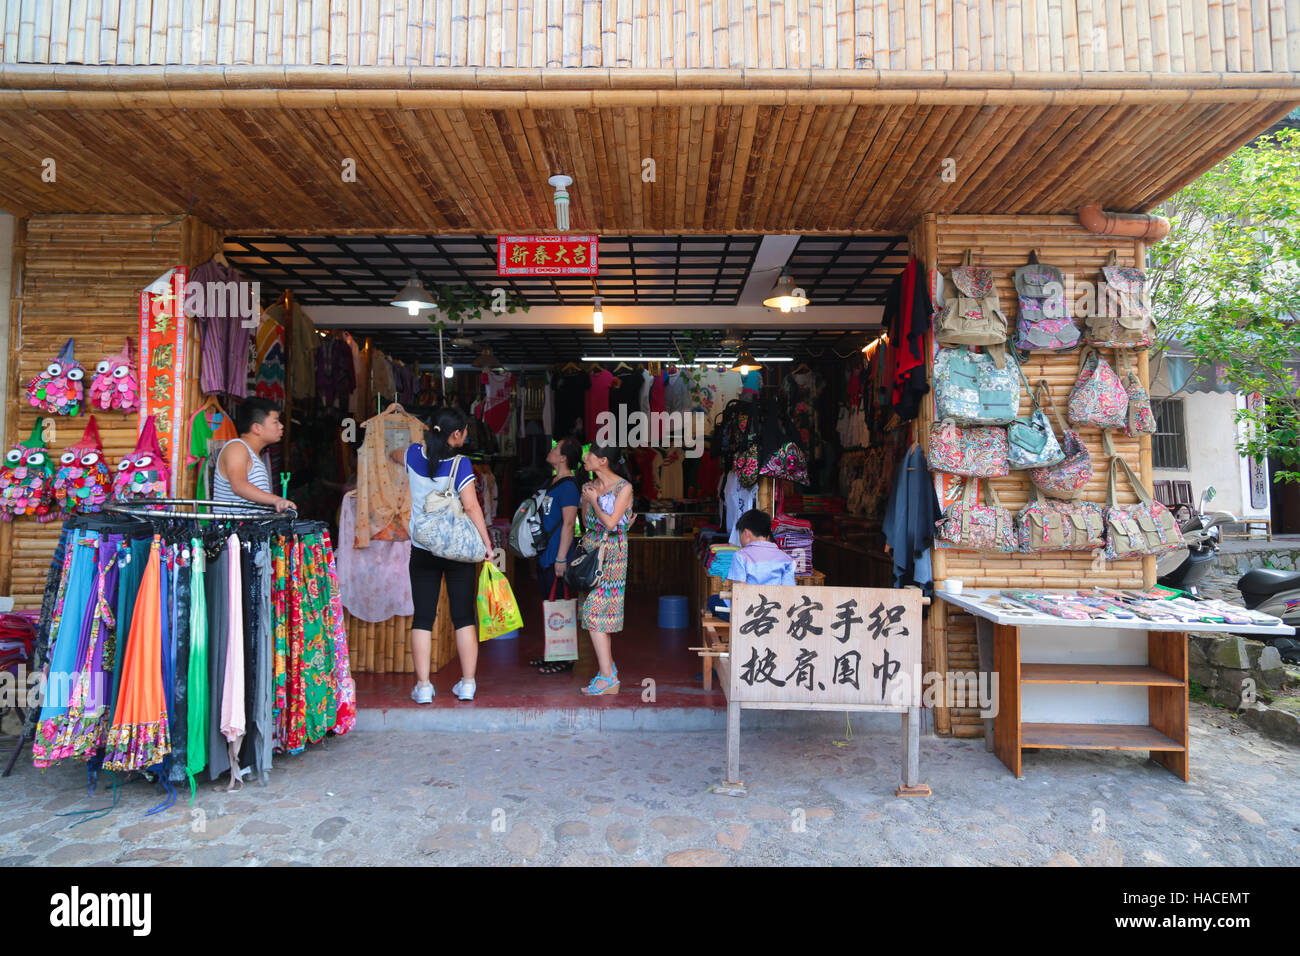 Customer at a shop selling Hakka ethnic gourments and textiles at Fujian earthen building (Tulou) cultural village at Yongding town, Fujian china. Stock Photo